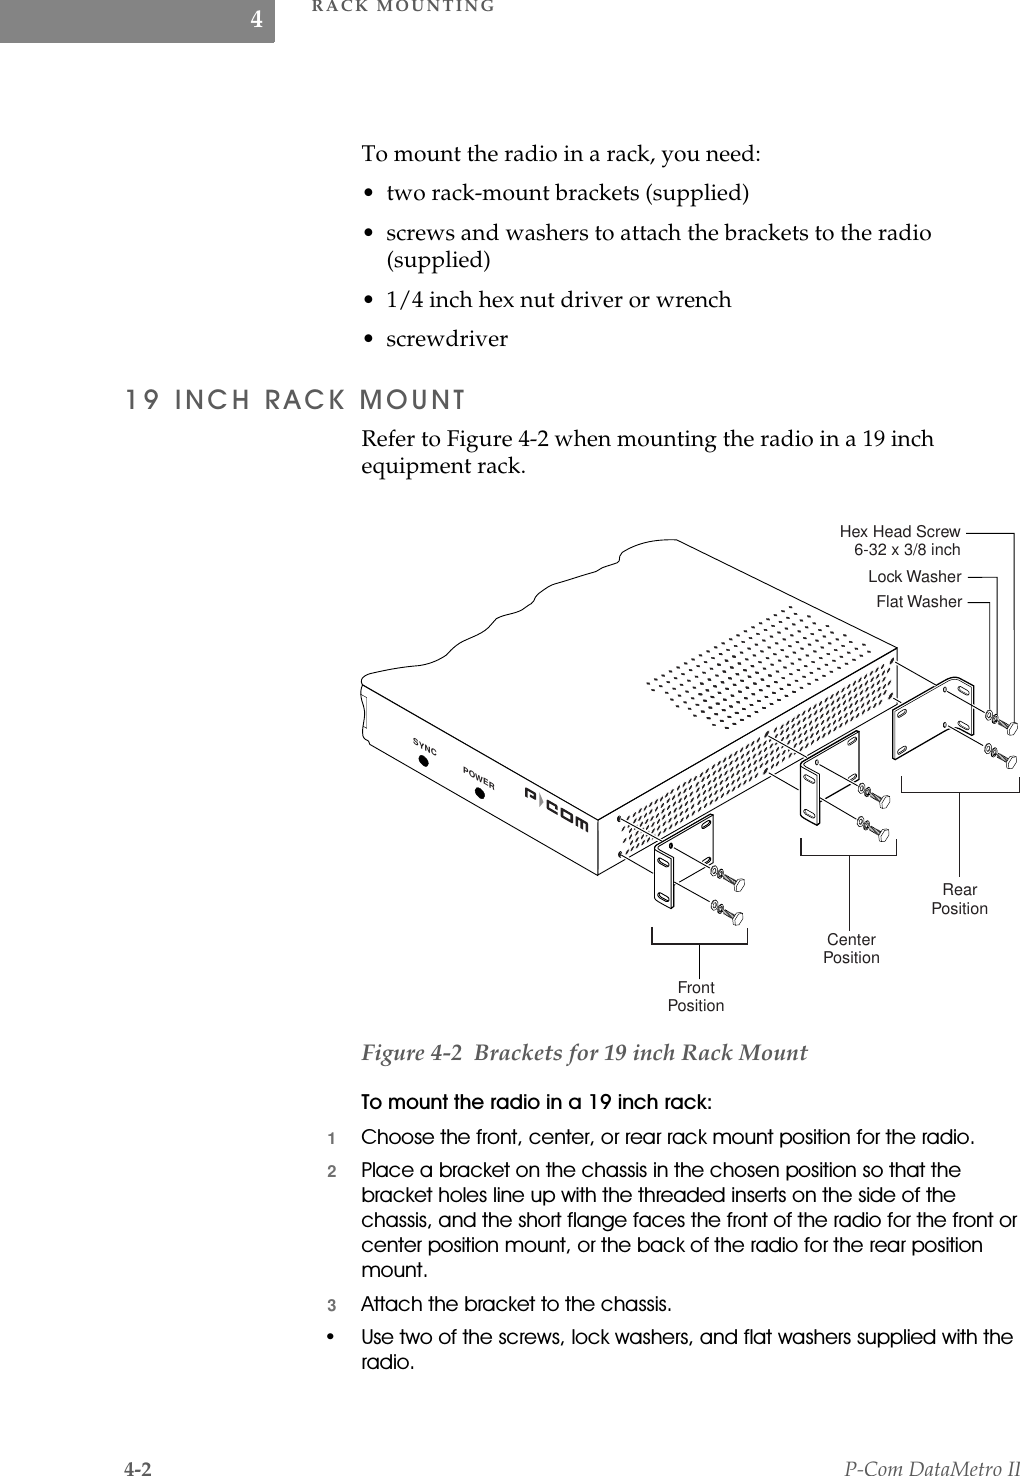 RACK MOUNTING4-2 P-Com DataMetro II4To mount the radio in a rack, you need:• two rack-mount brackets (supplied)• screws and washers to attach the brackets to the radio (supplied)• 1/4 inch hex nut driver or wrench• screwdriver,1&amp;+5$&amp;.02817Refer to Figure 4-2 when mounting the radio in a 19 inch equipment rack.Figure 4-2  Brackets for 19 inch Rack Mount7RPRXQWWKHUDGLRLQDLQFKUDFN1&amp;KRRVHWKHIURQWFHQWHURUUHDUUDFNPRXQWSRVLWLRQIRUWKHUDGLR23ODFHDEUDFNHWRQWKHFKDVVLVLQWKHFKRVHQSRVLWLRQVRWKDWWKHEUDFNHWKROHVOLQHXSZLWKWKHWKUHDGHGLQVHUWVRQWKHVLGHRIWKHFKDVVLVDQGWKHVKRUWIODQJHIDFHVWKHIURQWRIWKHUDGLRIRUWKHIURQWRUFHQWHUSRVLWLRQPRXQWRUWKHEDFNRIWKHUDGLRIRUWKHUHDUSRVLWLRQPRXQW3$WWDFKWKHEUDFNHWWRWKHFKDVVLV 8VHWZRRIWKHVFUHZVORFNZDVKHUVDQGIODWZDVKHUVVXSSOLHGZLWKWKHUDGLRFrontPositionCenterPositionRearPositionFlat WasherLock WasherHex Head Screw 6-32 x 3/8 inchSYNC POWER